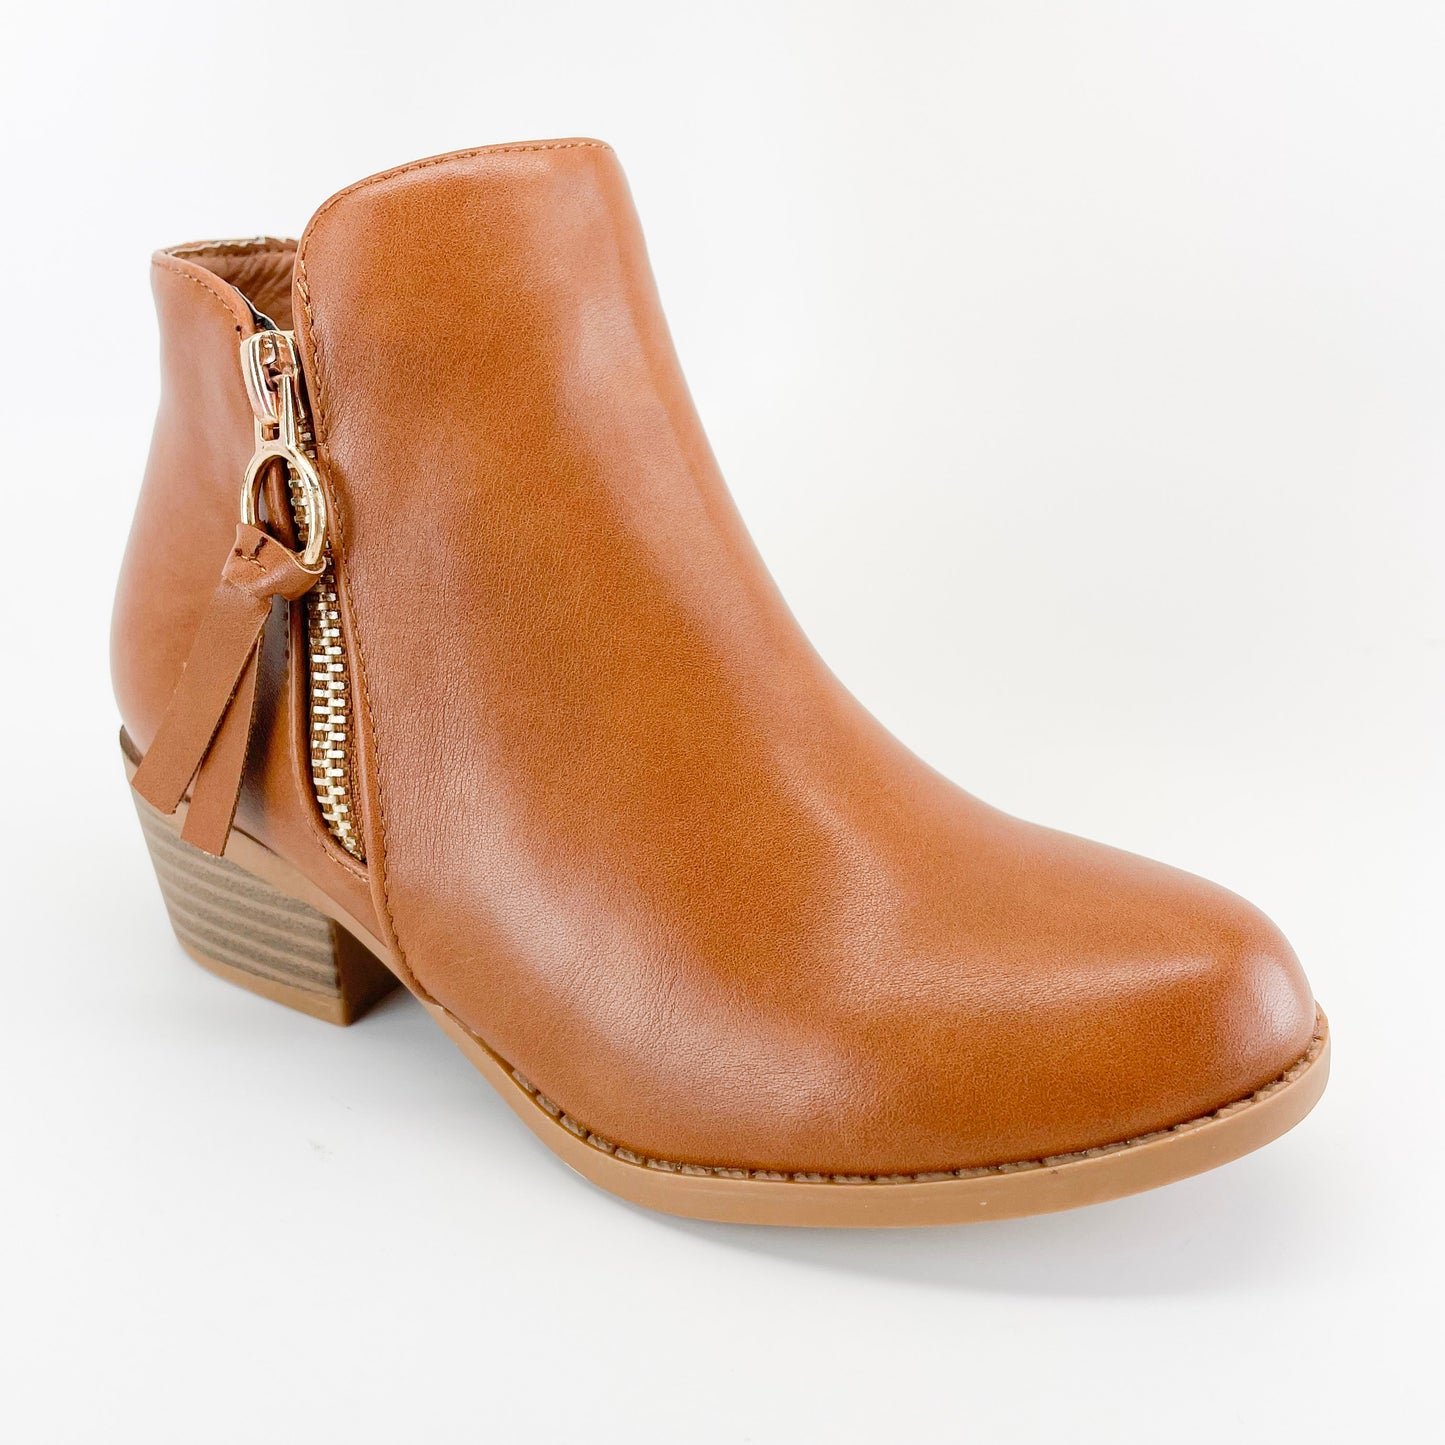 lucky top zandra-38k tan girl boots with zipper closure